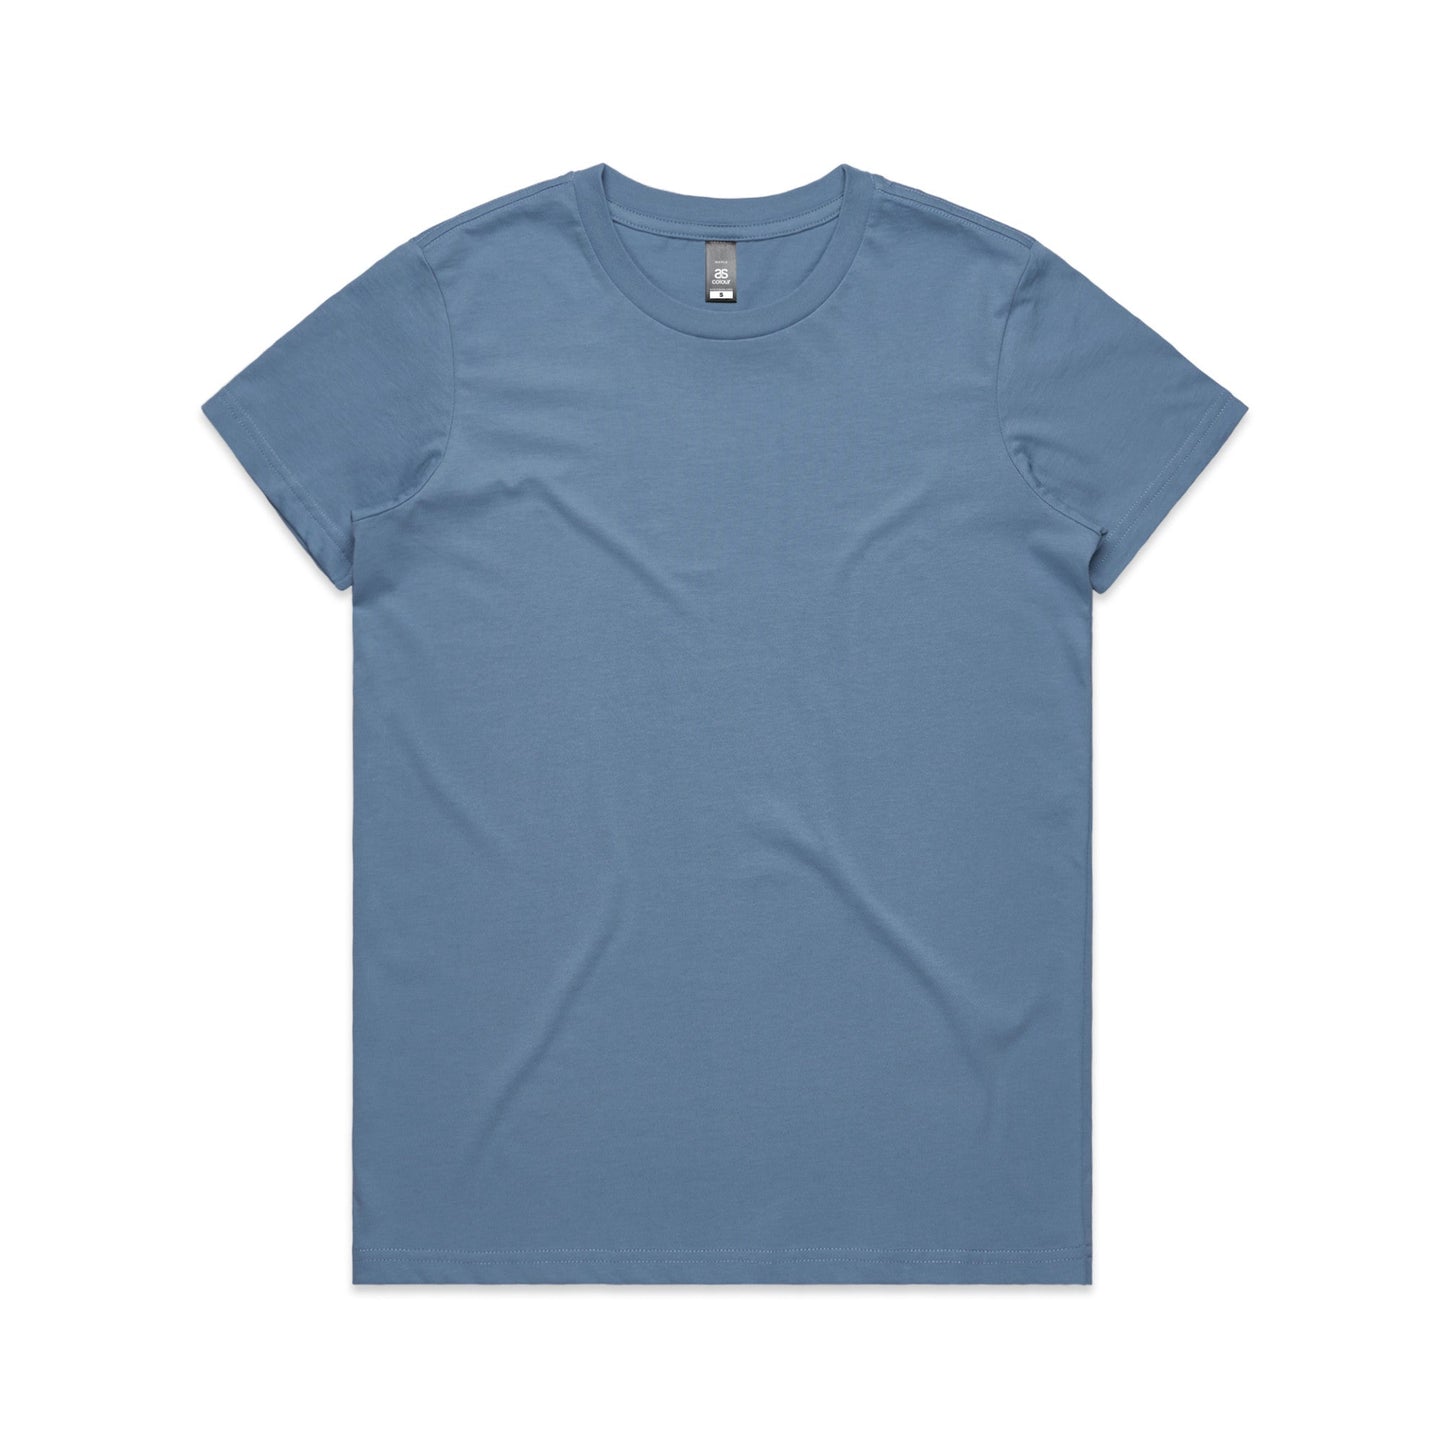 "Shop Like Rachel" Relaxed Maple T-Shirt